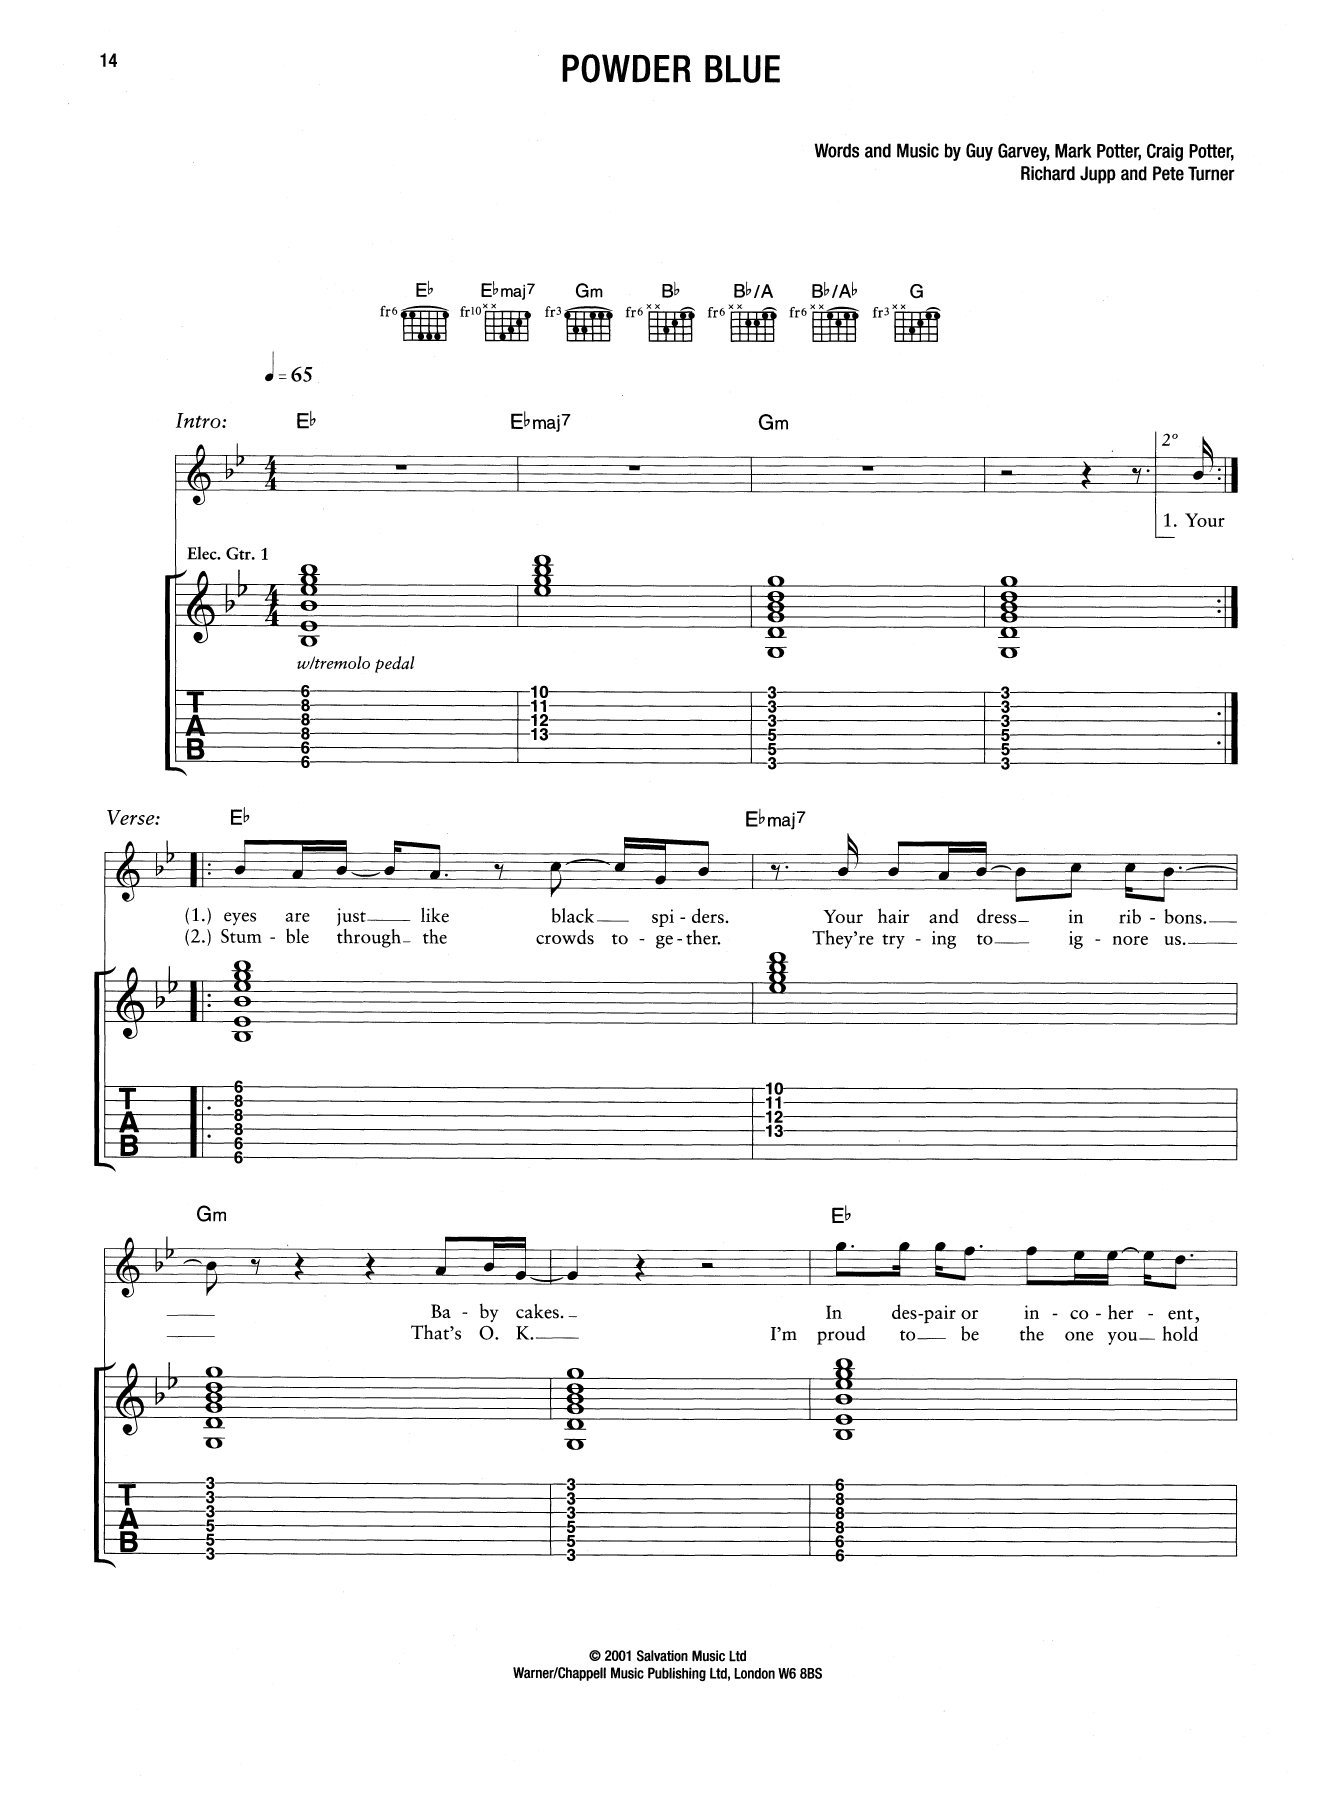 Elbow Powder Blue Sheet Music Notes & Chords for Guitar Tab - Download or Print PDF